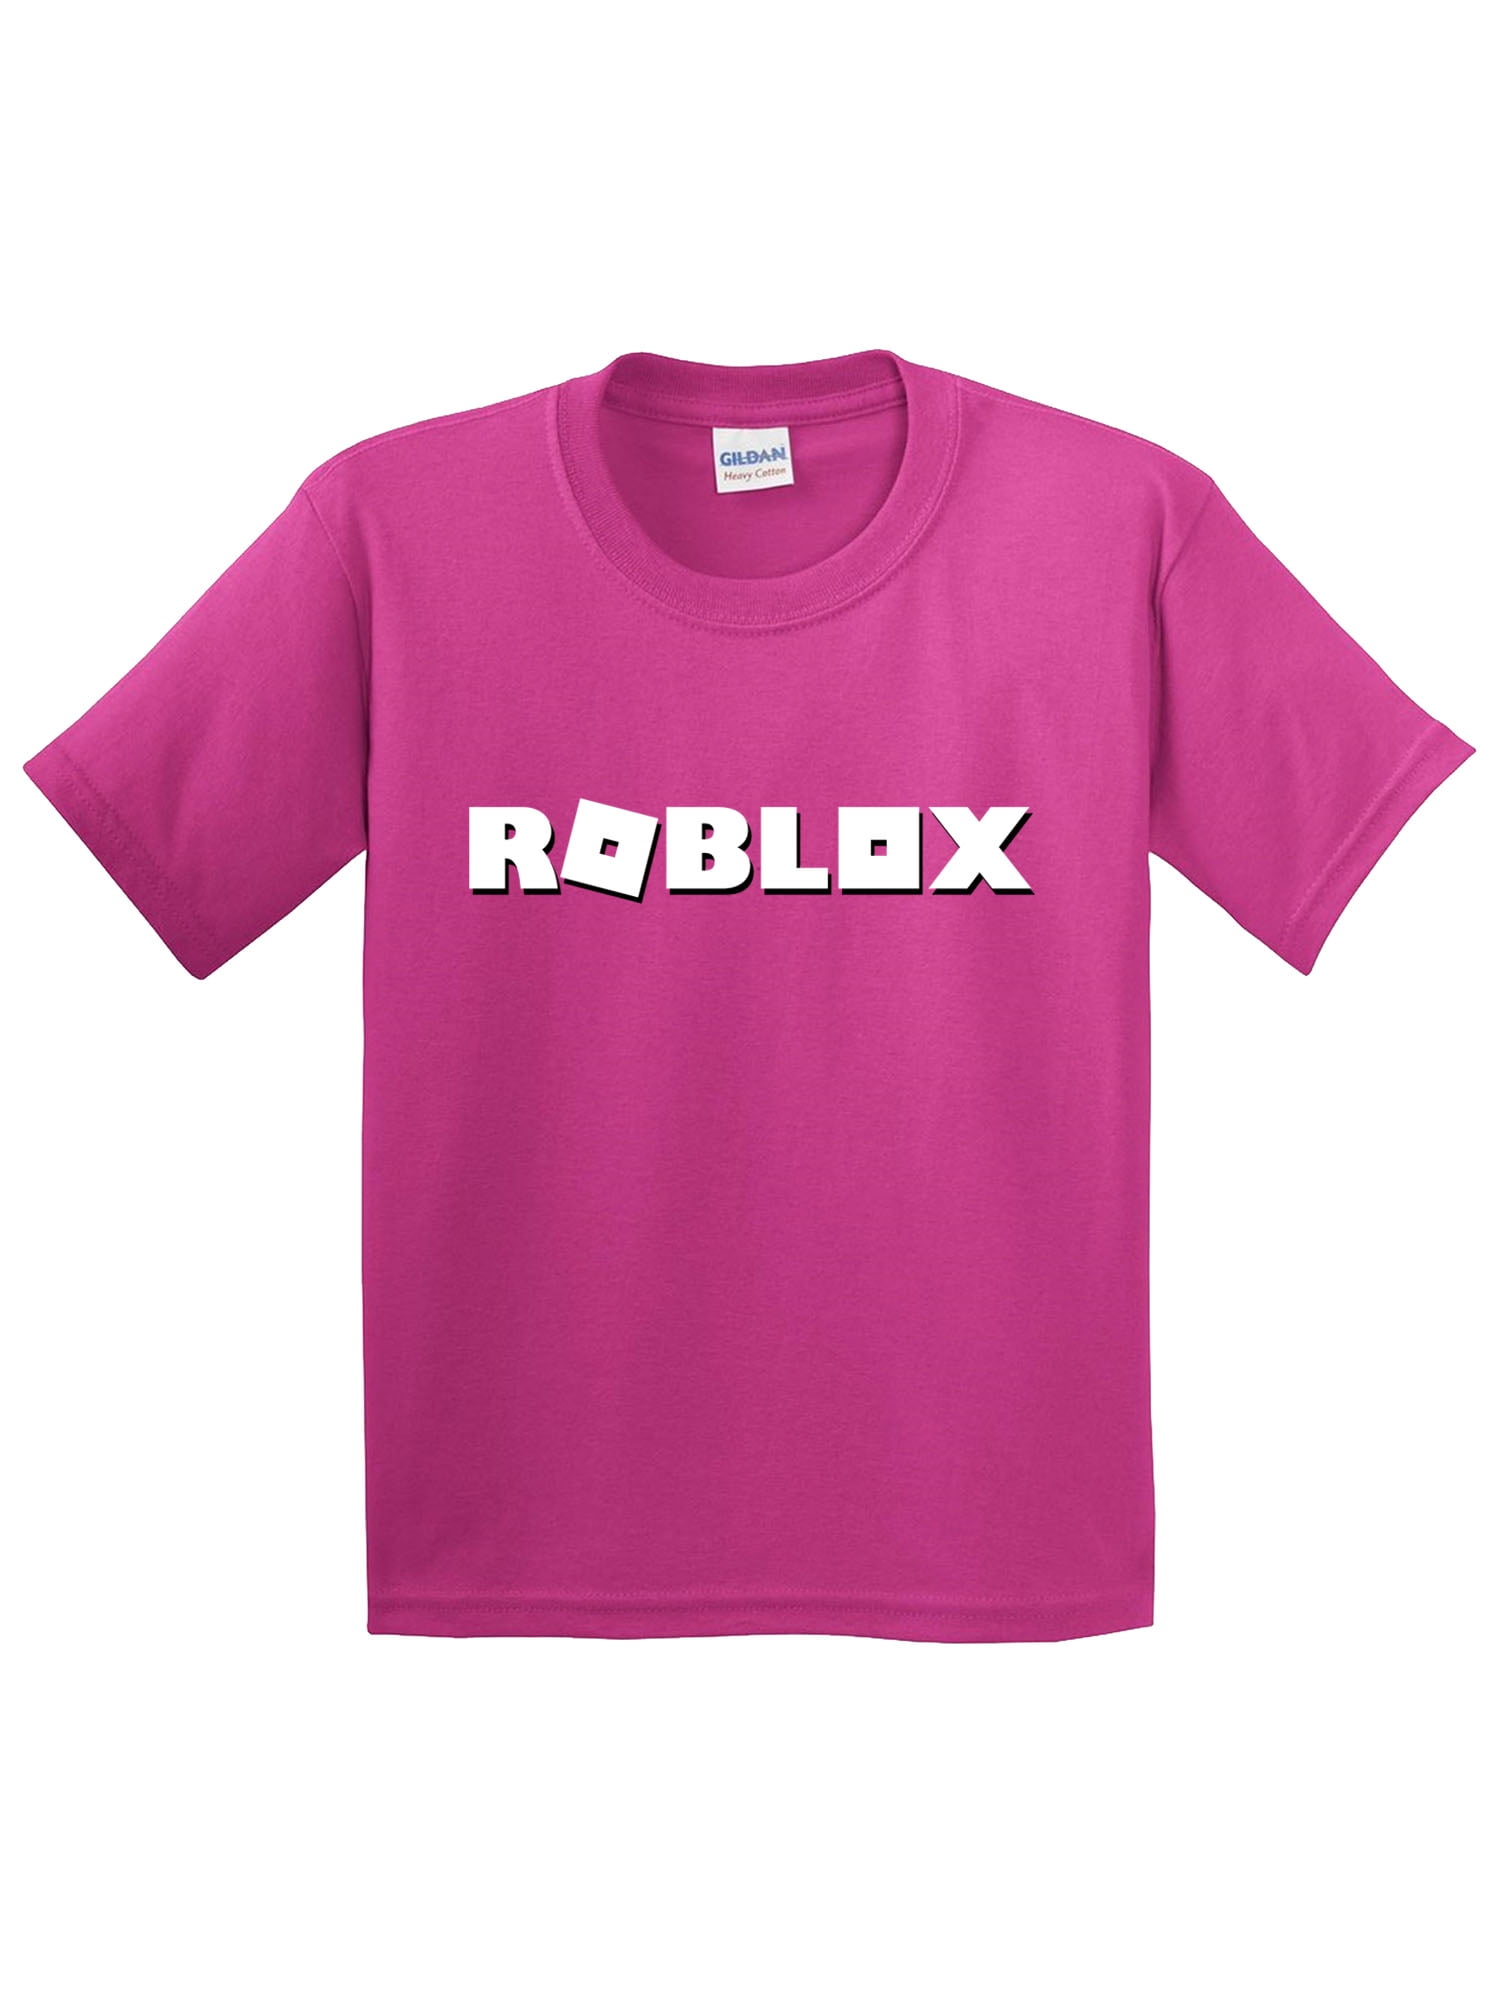 How To Make T Shirts On Roblox Ipad Nils Stucki Kieferorthopade - 2018 summer boys t shirt roblox stardust ethical cotton t shirt